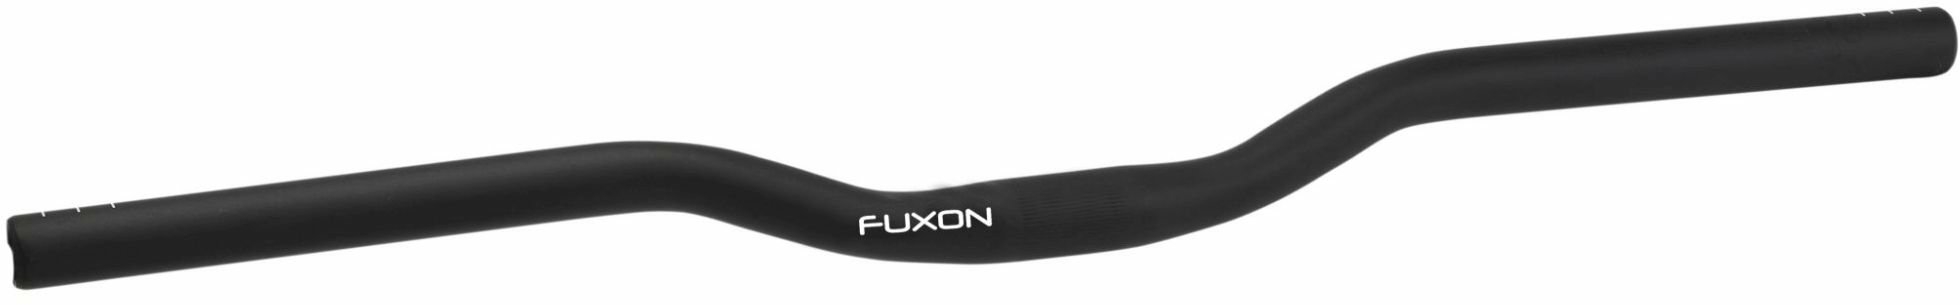 Fuxon Premio SL Lenker 25,4 / 620 mm, schwarz